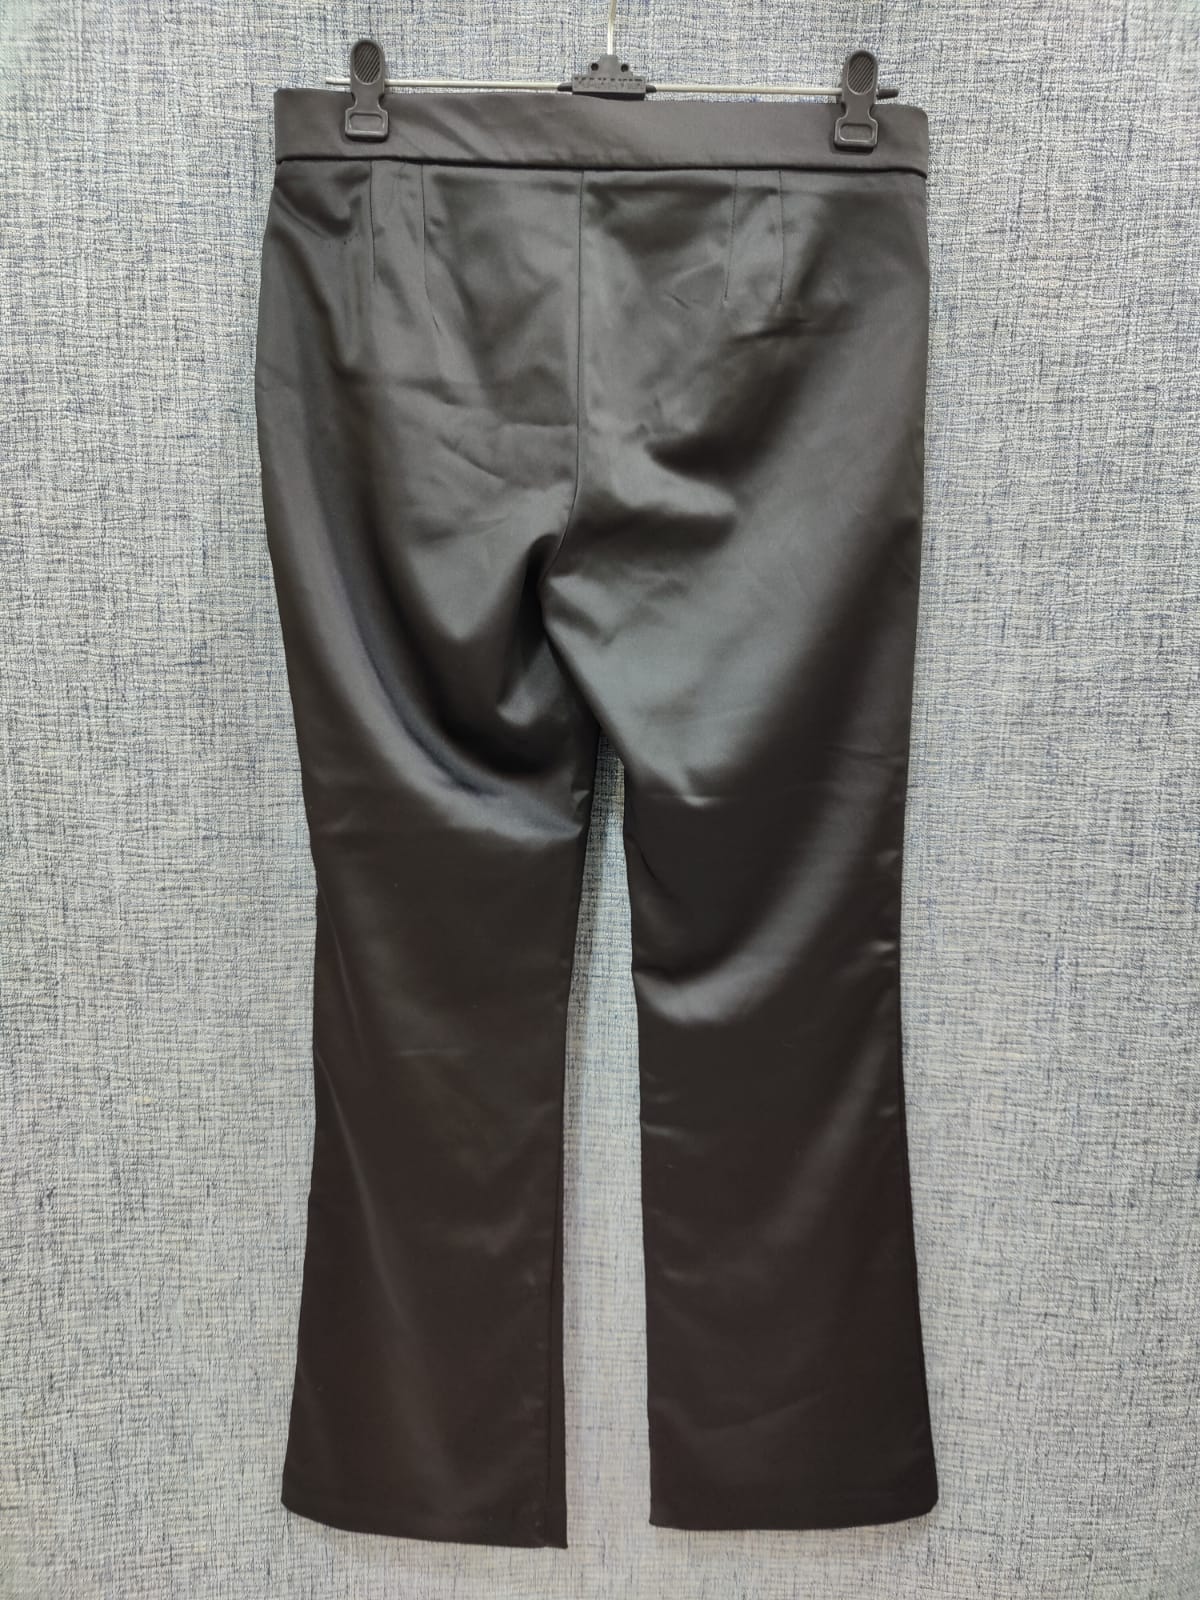 Flowy Sheer Black Pants - 2020 Zara Collection